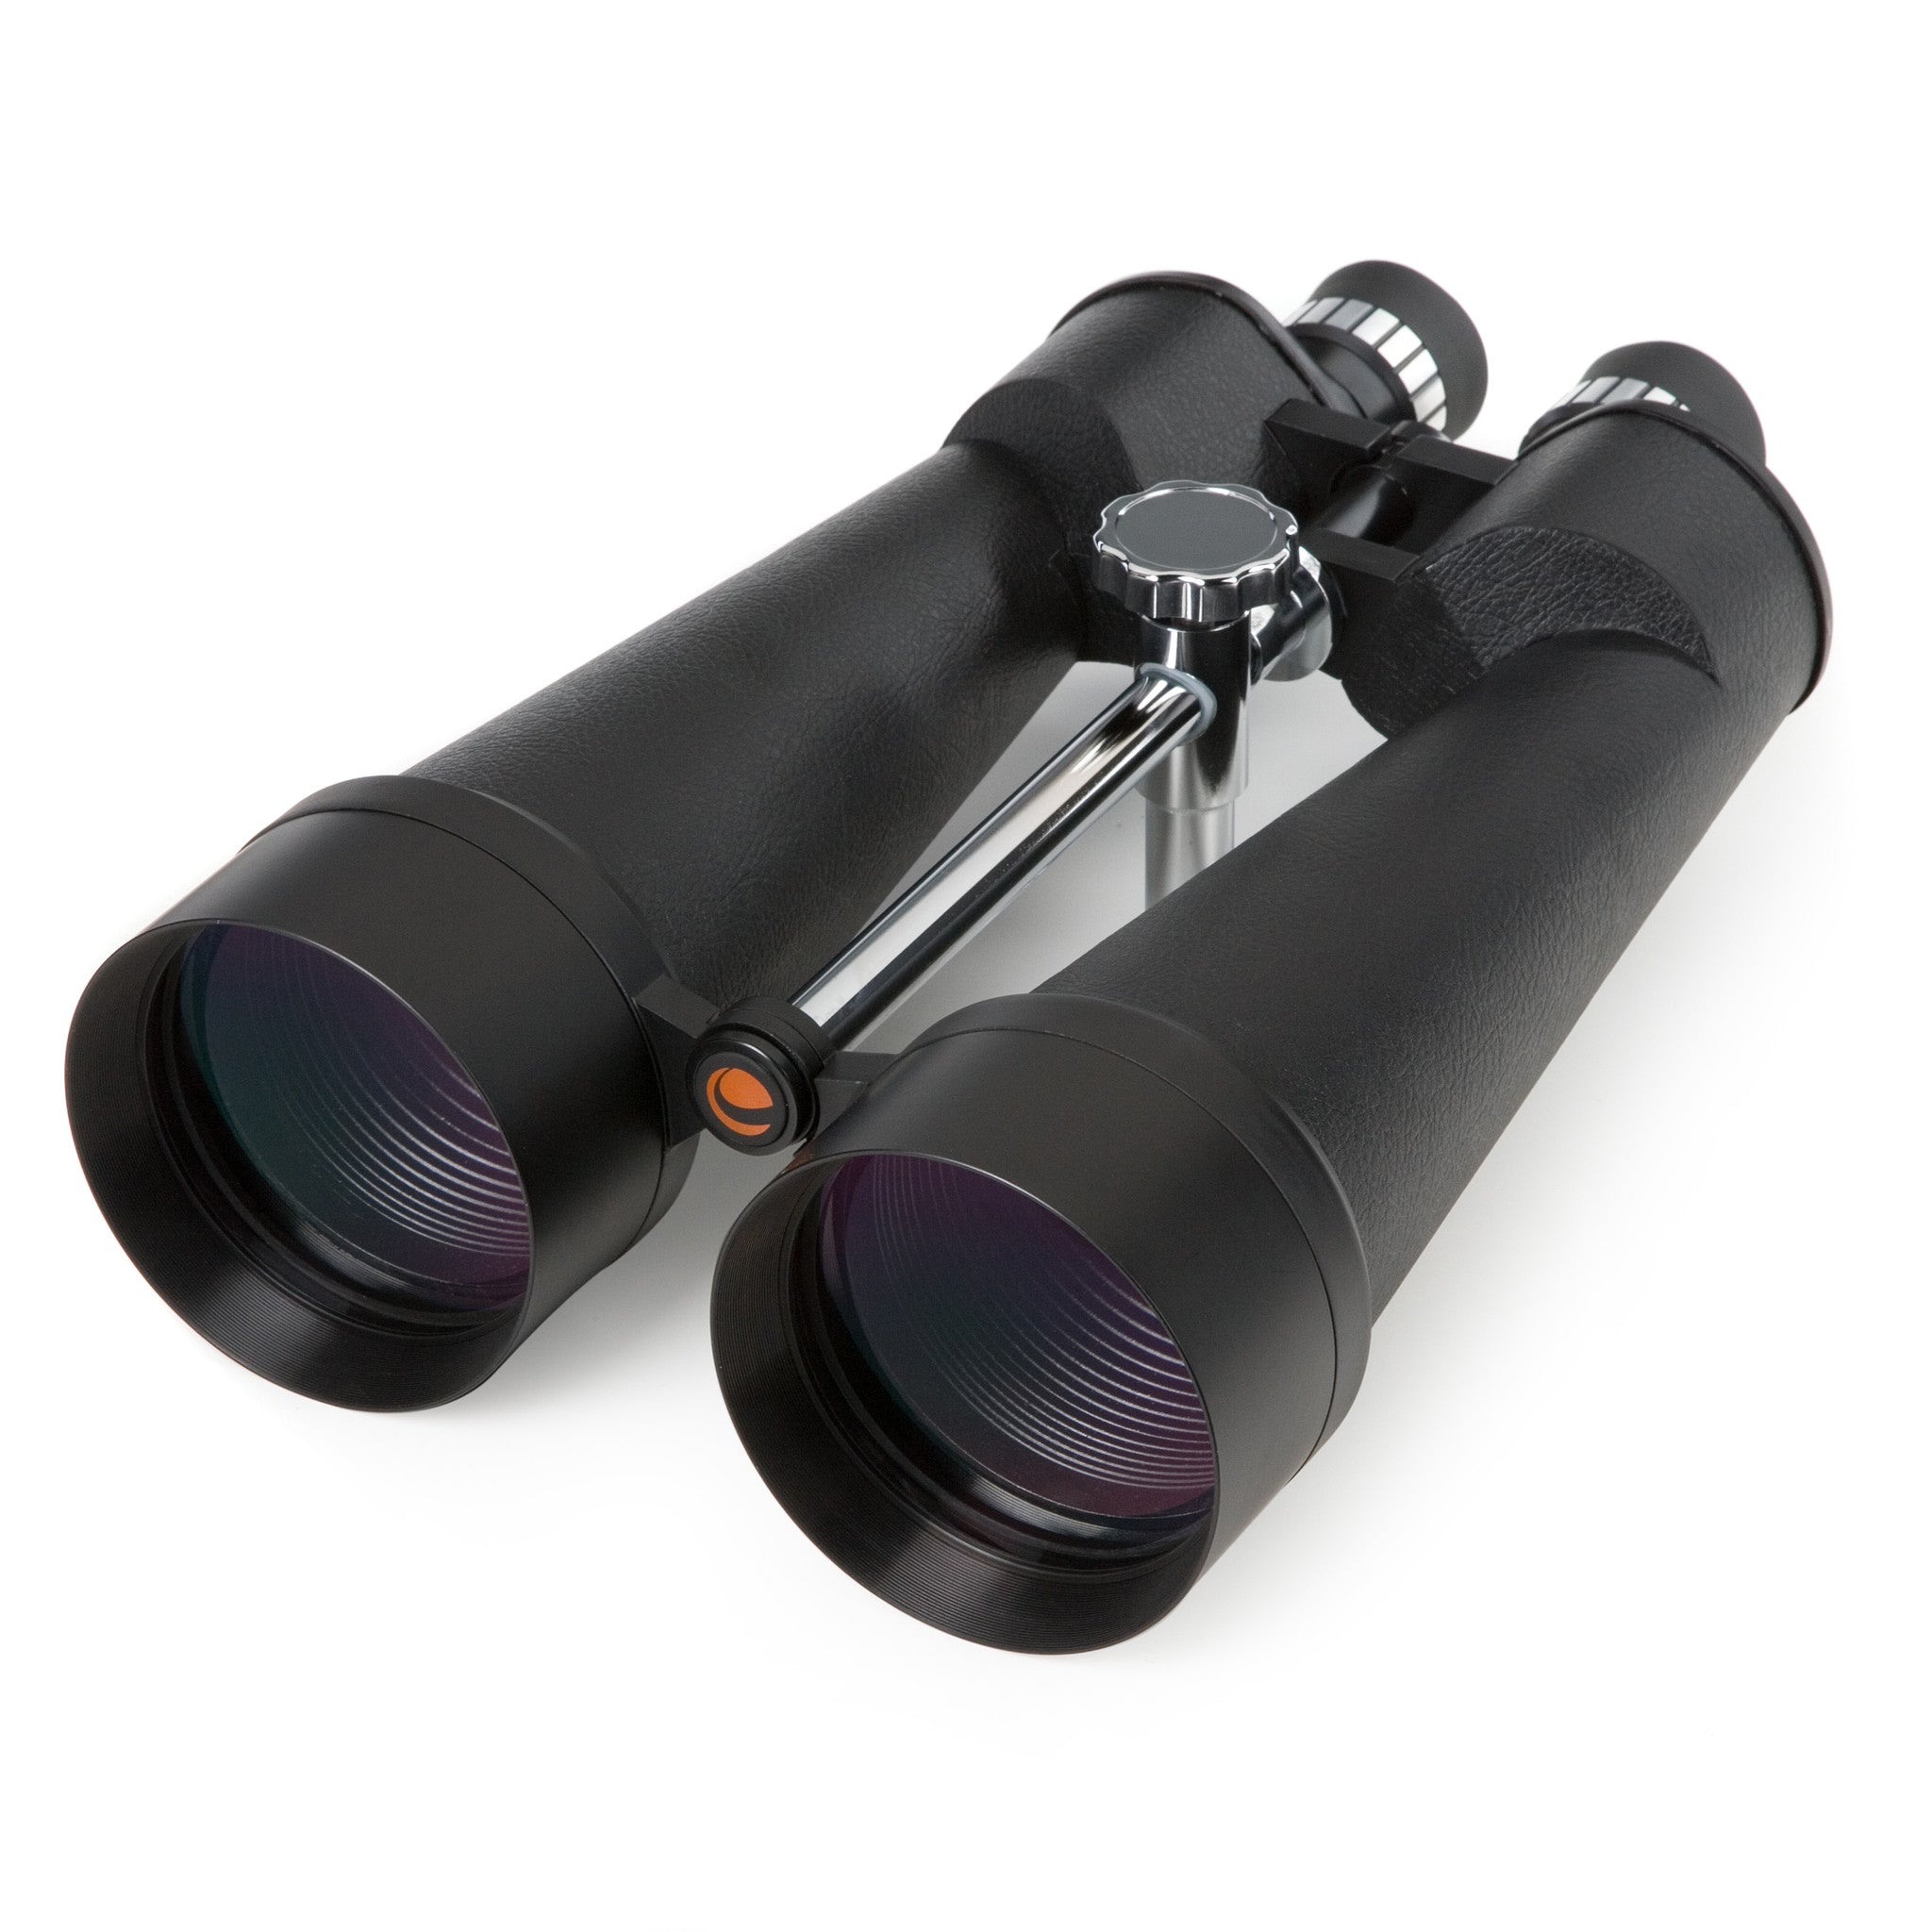 astronomical binoculars for sale